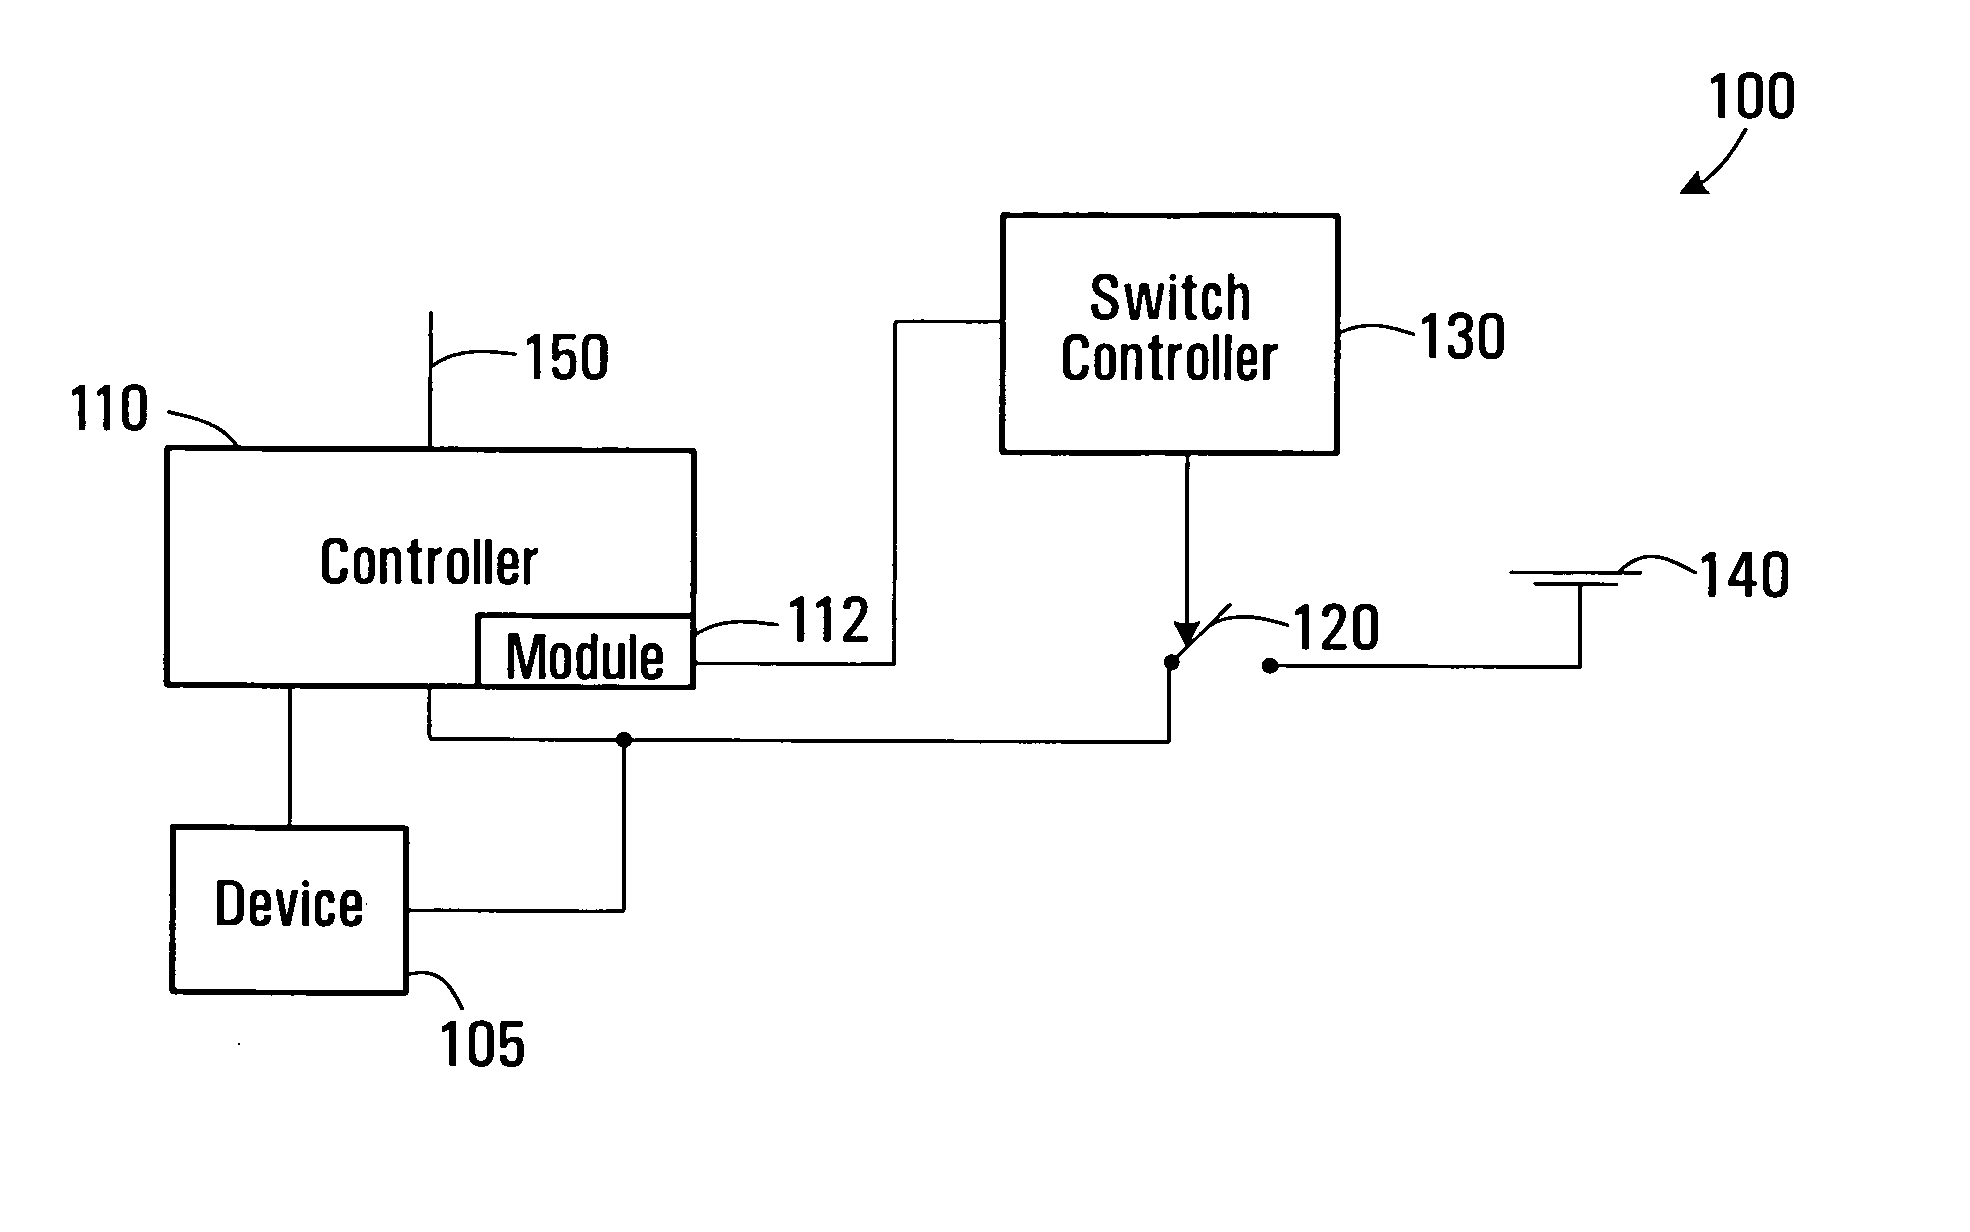 Power cycle circuit